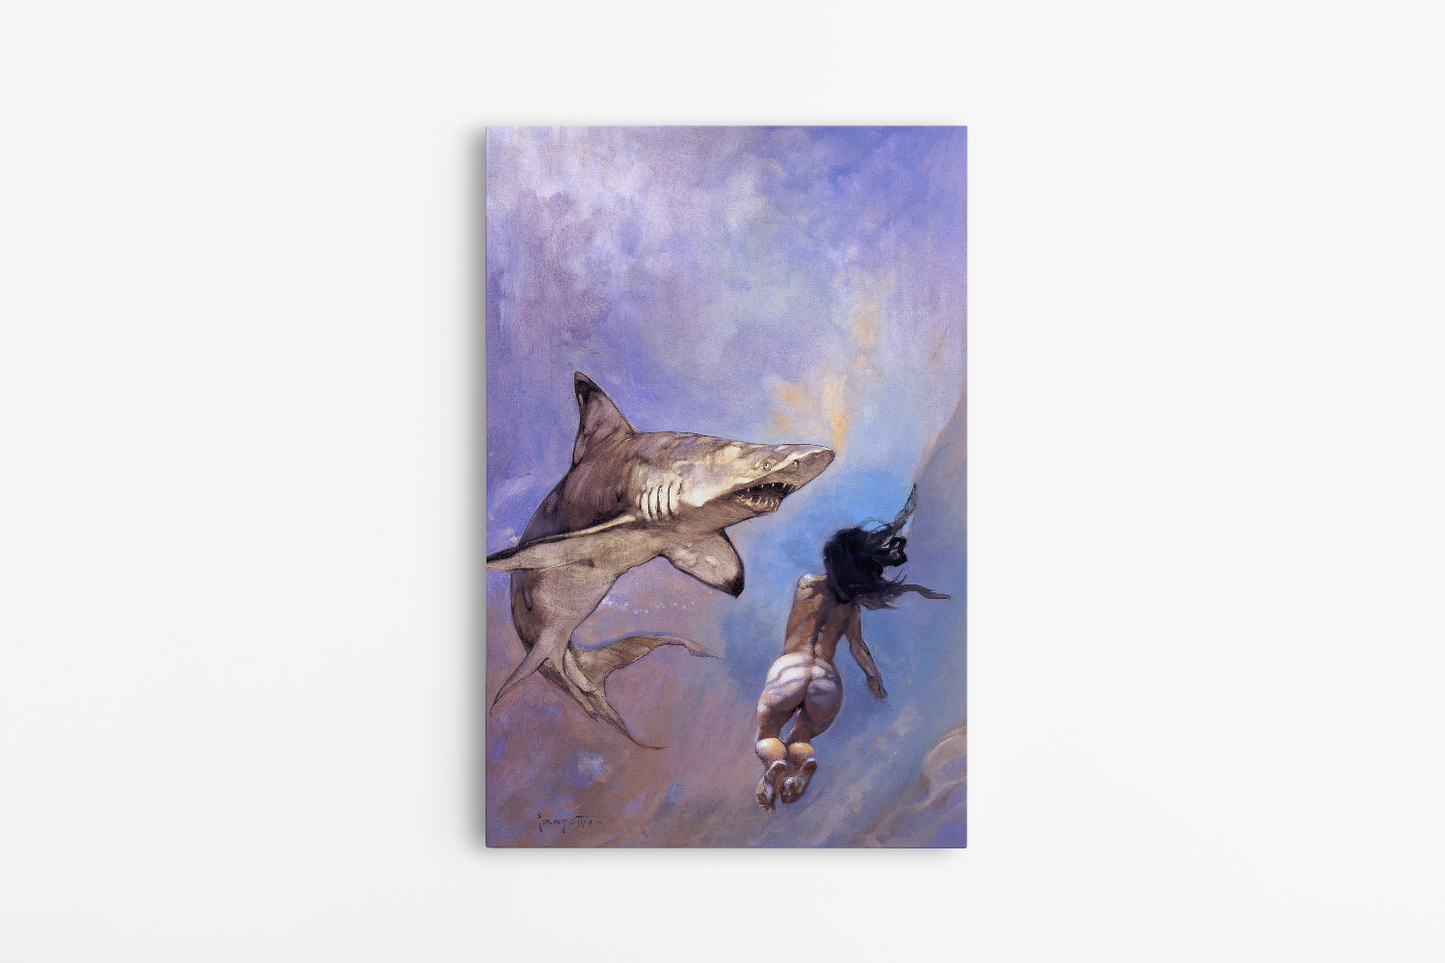 Requiem of a Shark Mini Wrap-Around Canvas Art